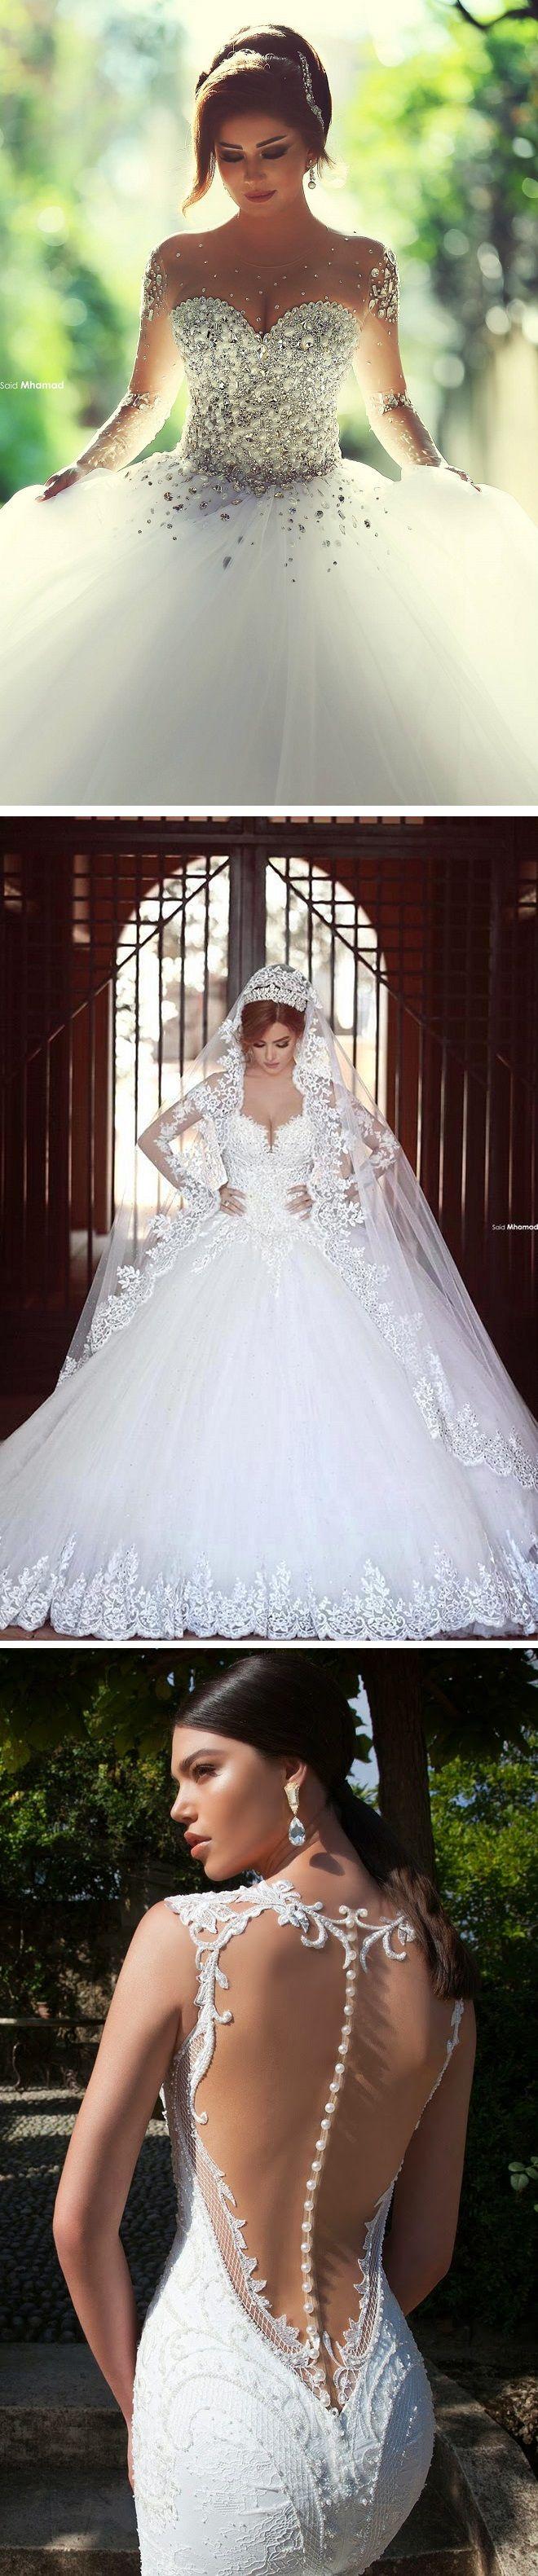 زفاف - 10 Jaw-Droppingly Beautiful Wedding Dresses To Obsess Over!